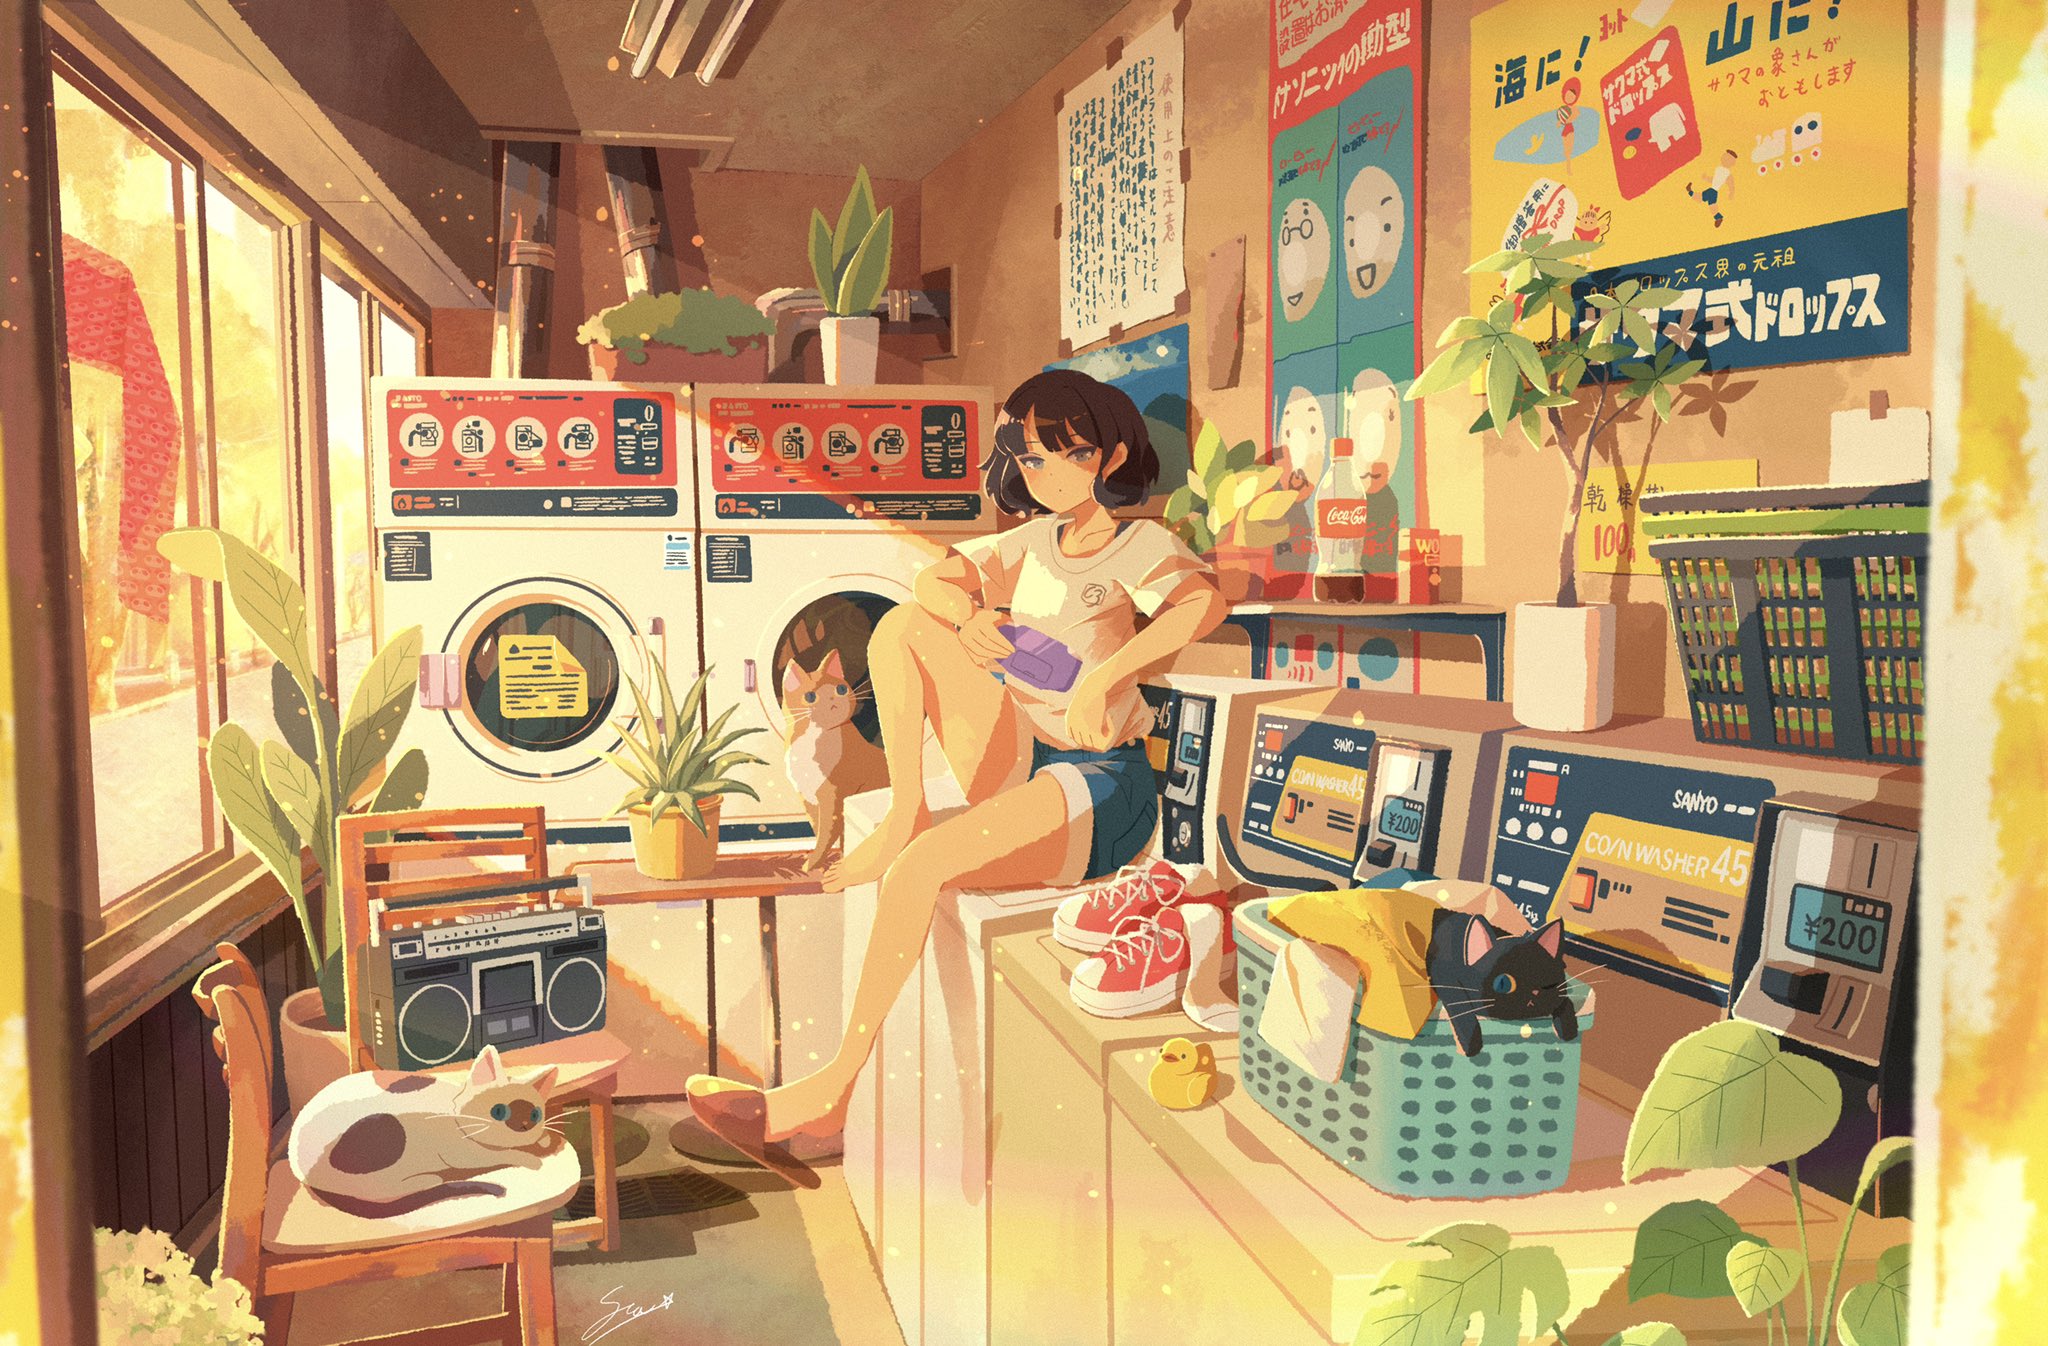 Anime Girls Washing Machine Black Cat Cats GameBoy Advance Consoles Boombox Sitting Short Hair Leave 2048x1346